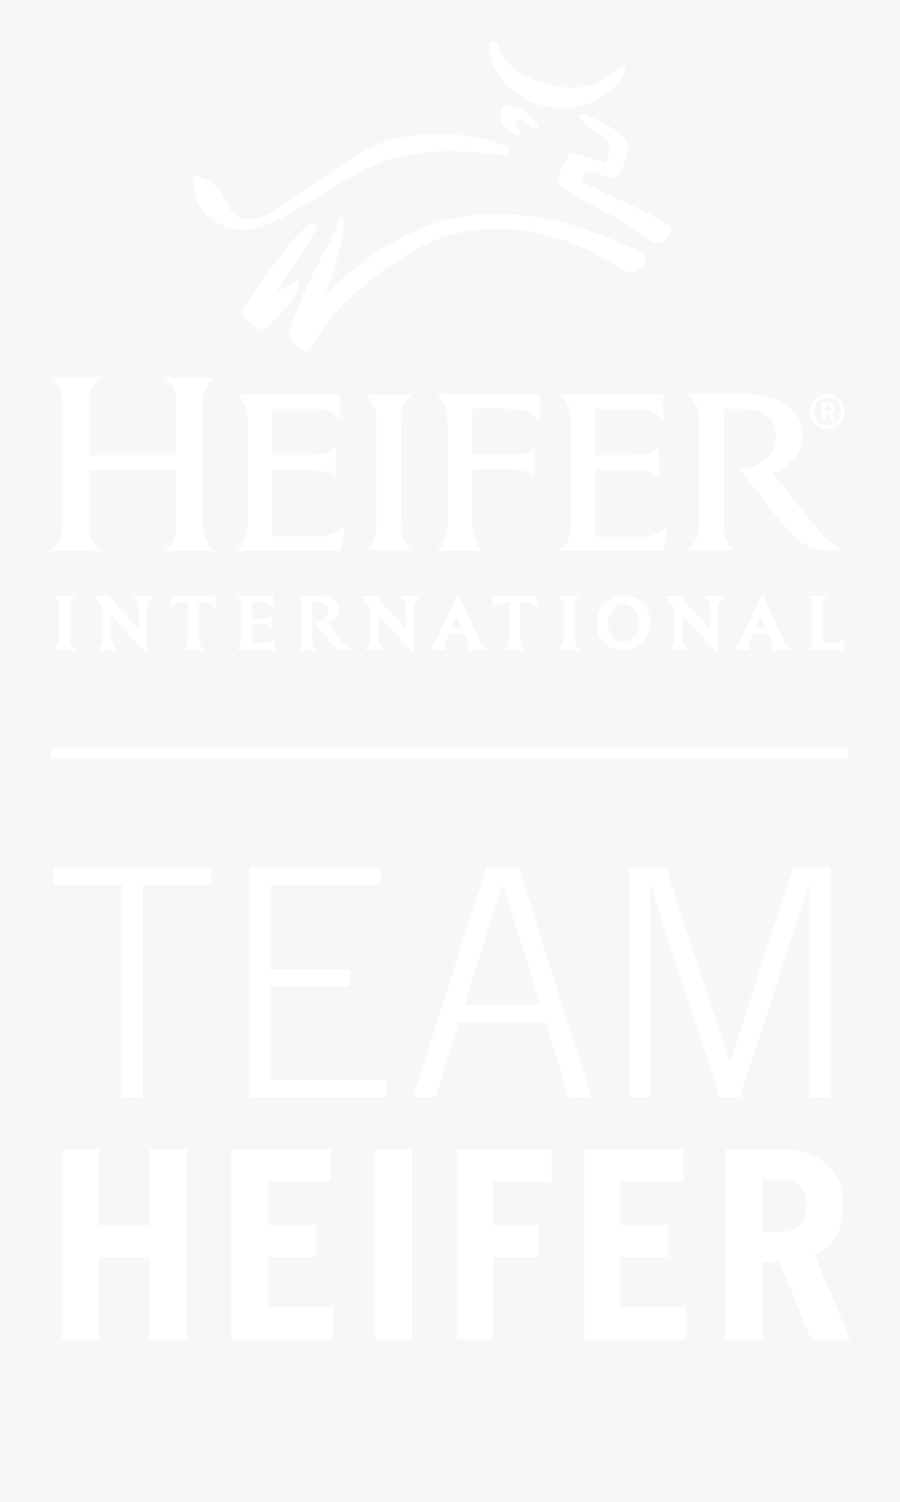 Finish Line Clipart Endurance - Heifer International, Transparent Clipart